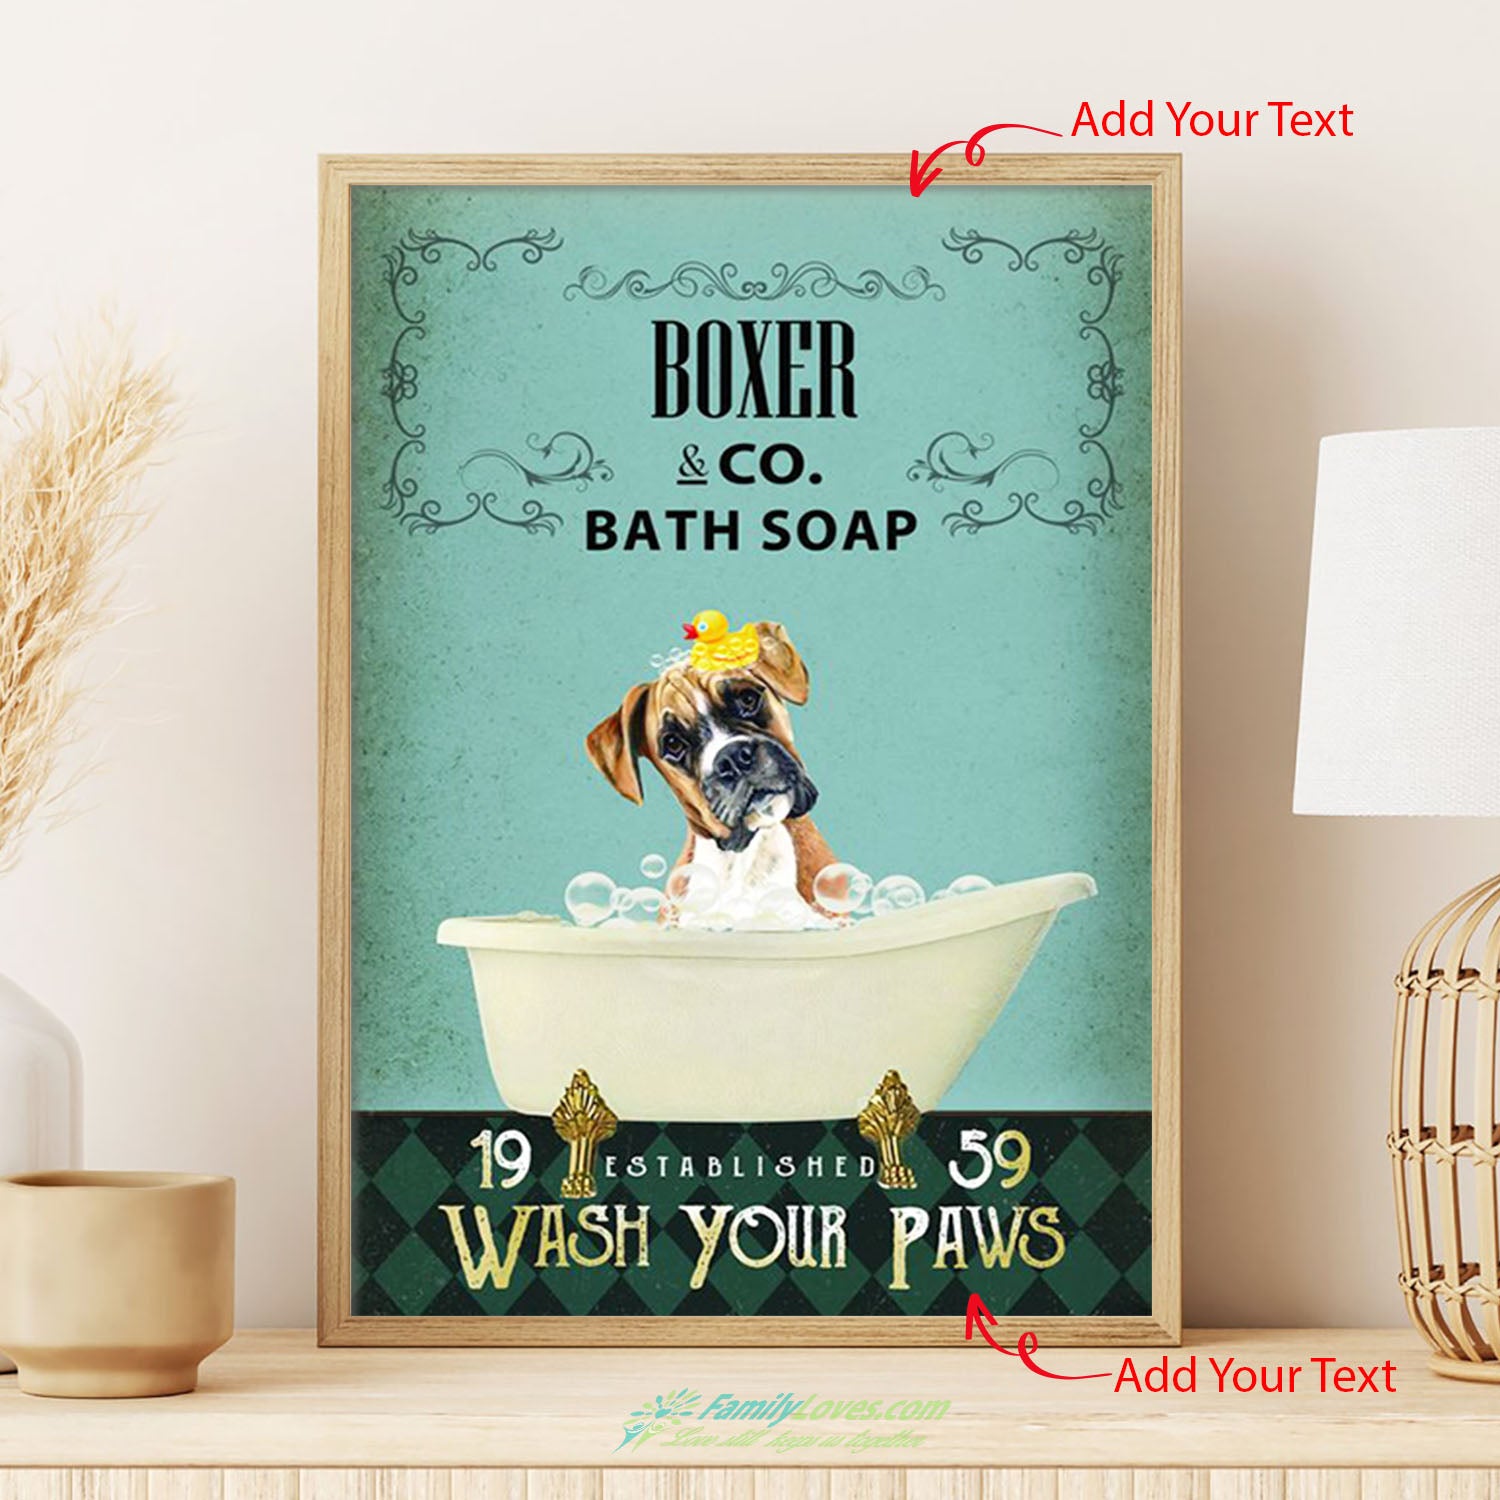 Boxer Co.Bath Soap Canvas 36 X 48 Poster Wall Decor All Size 1